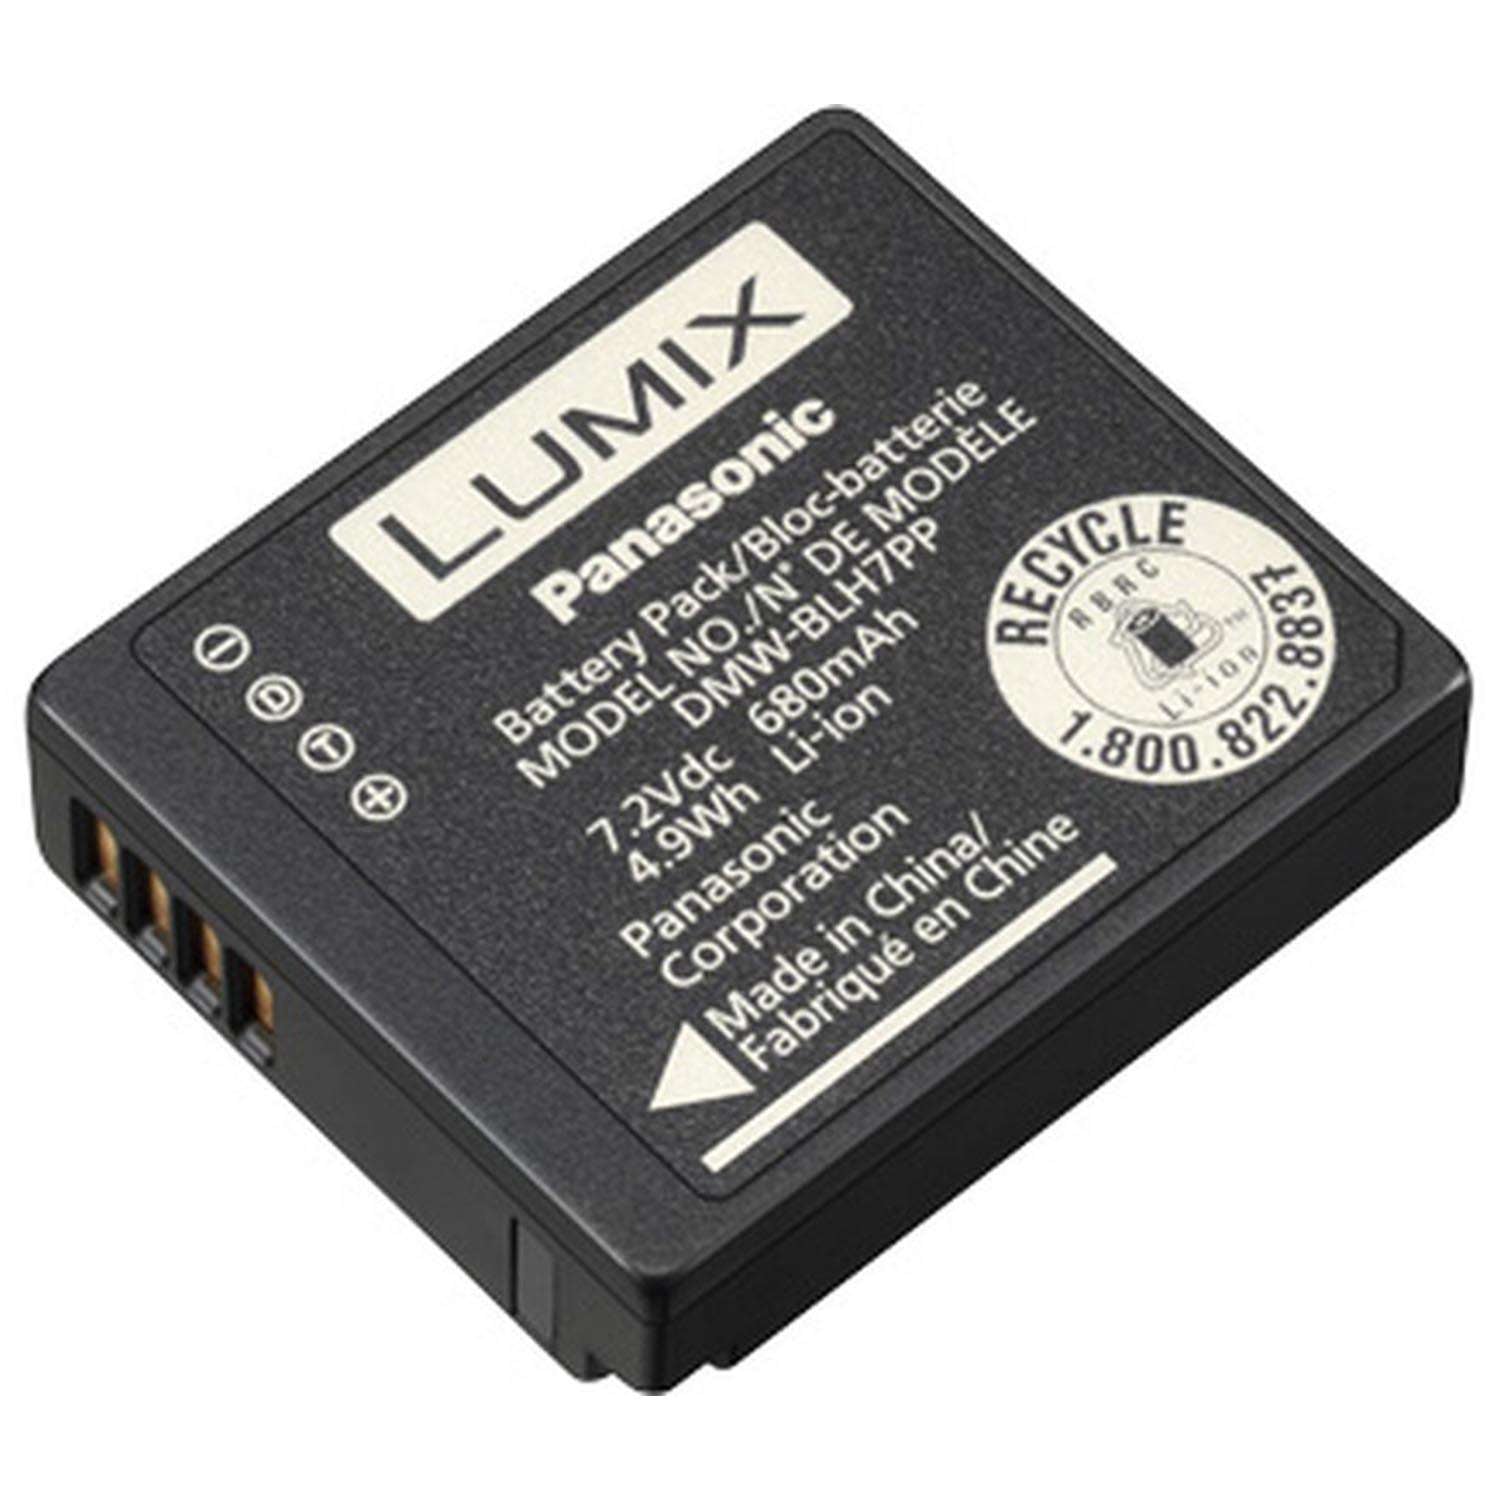 Panasonic Battery DMC-LX10K